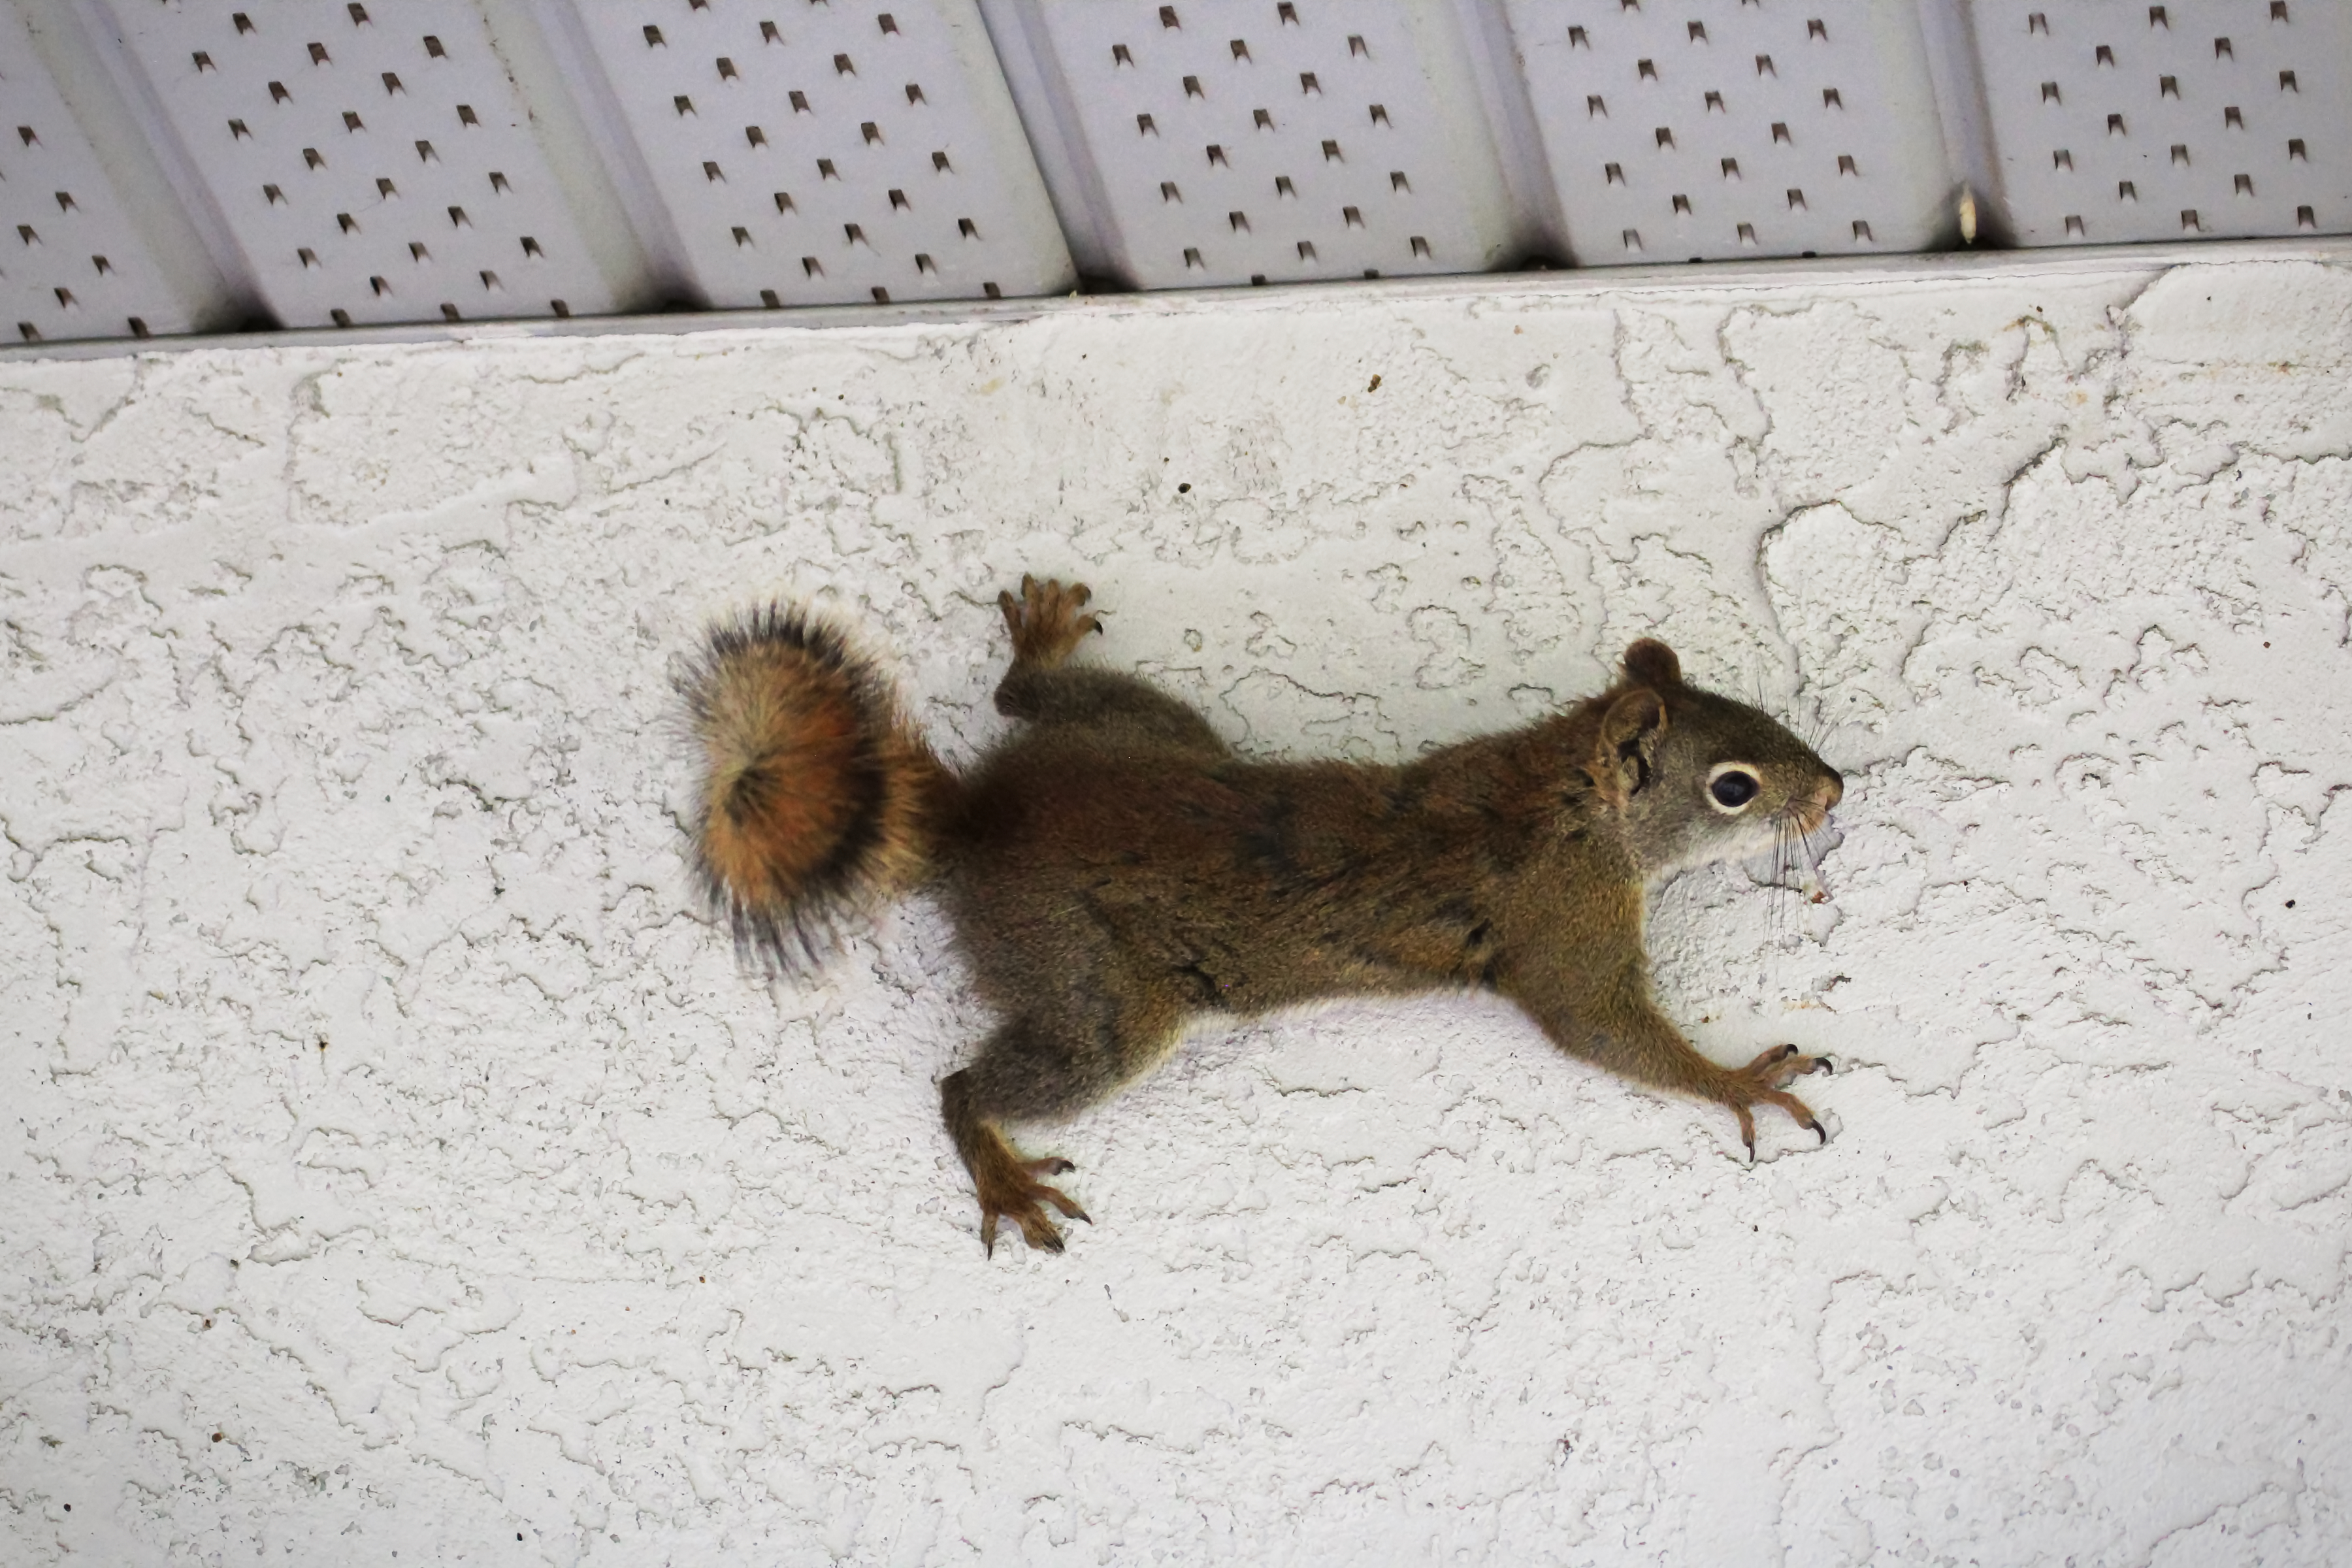 Squirrel Removal, Squirrels in Attic, Damage Repair, Greenville SC